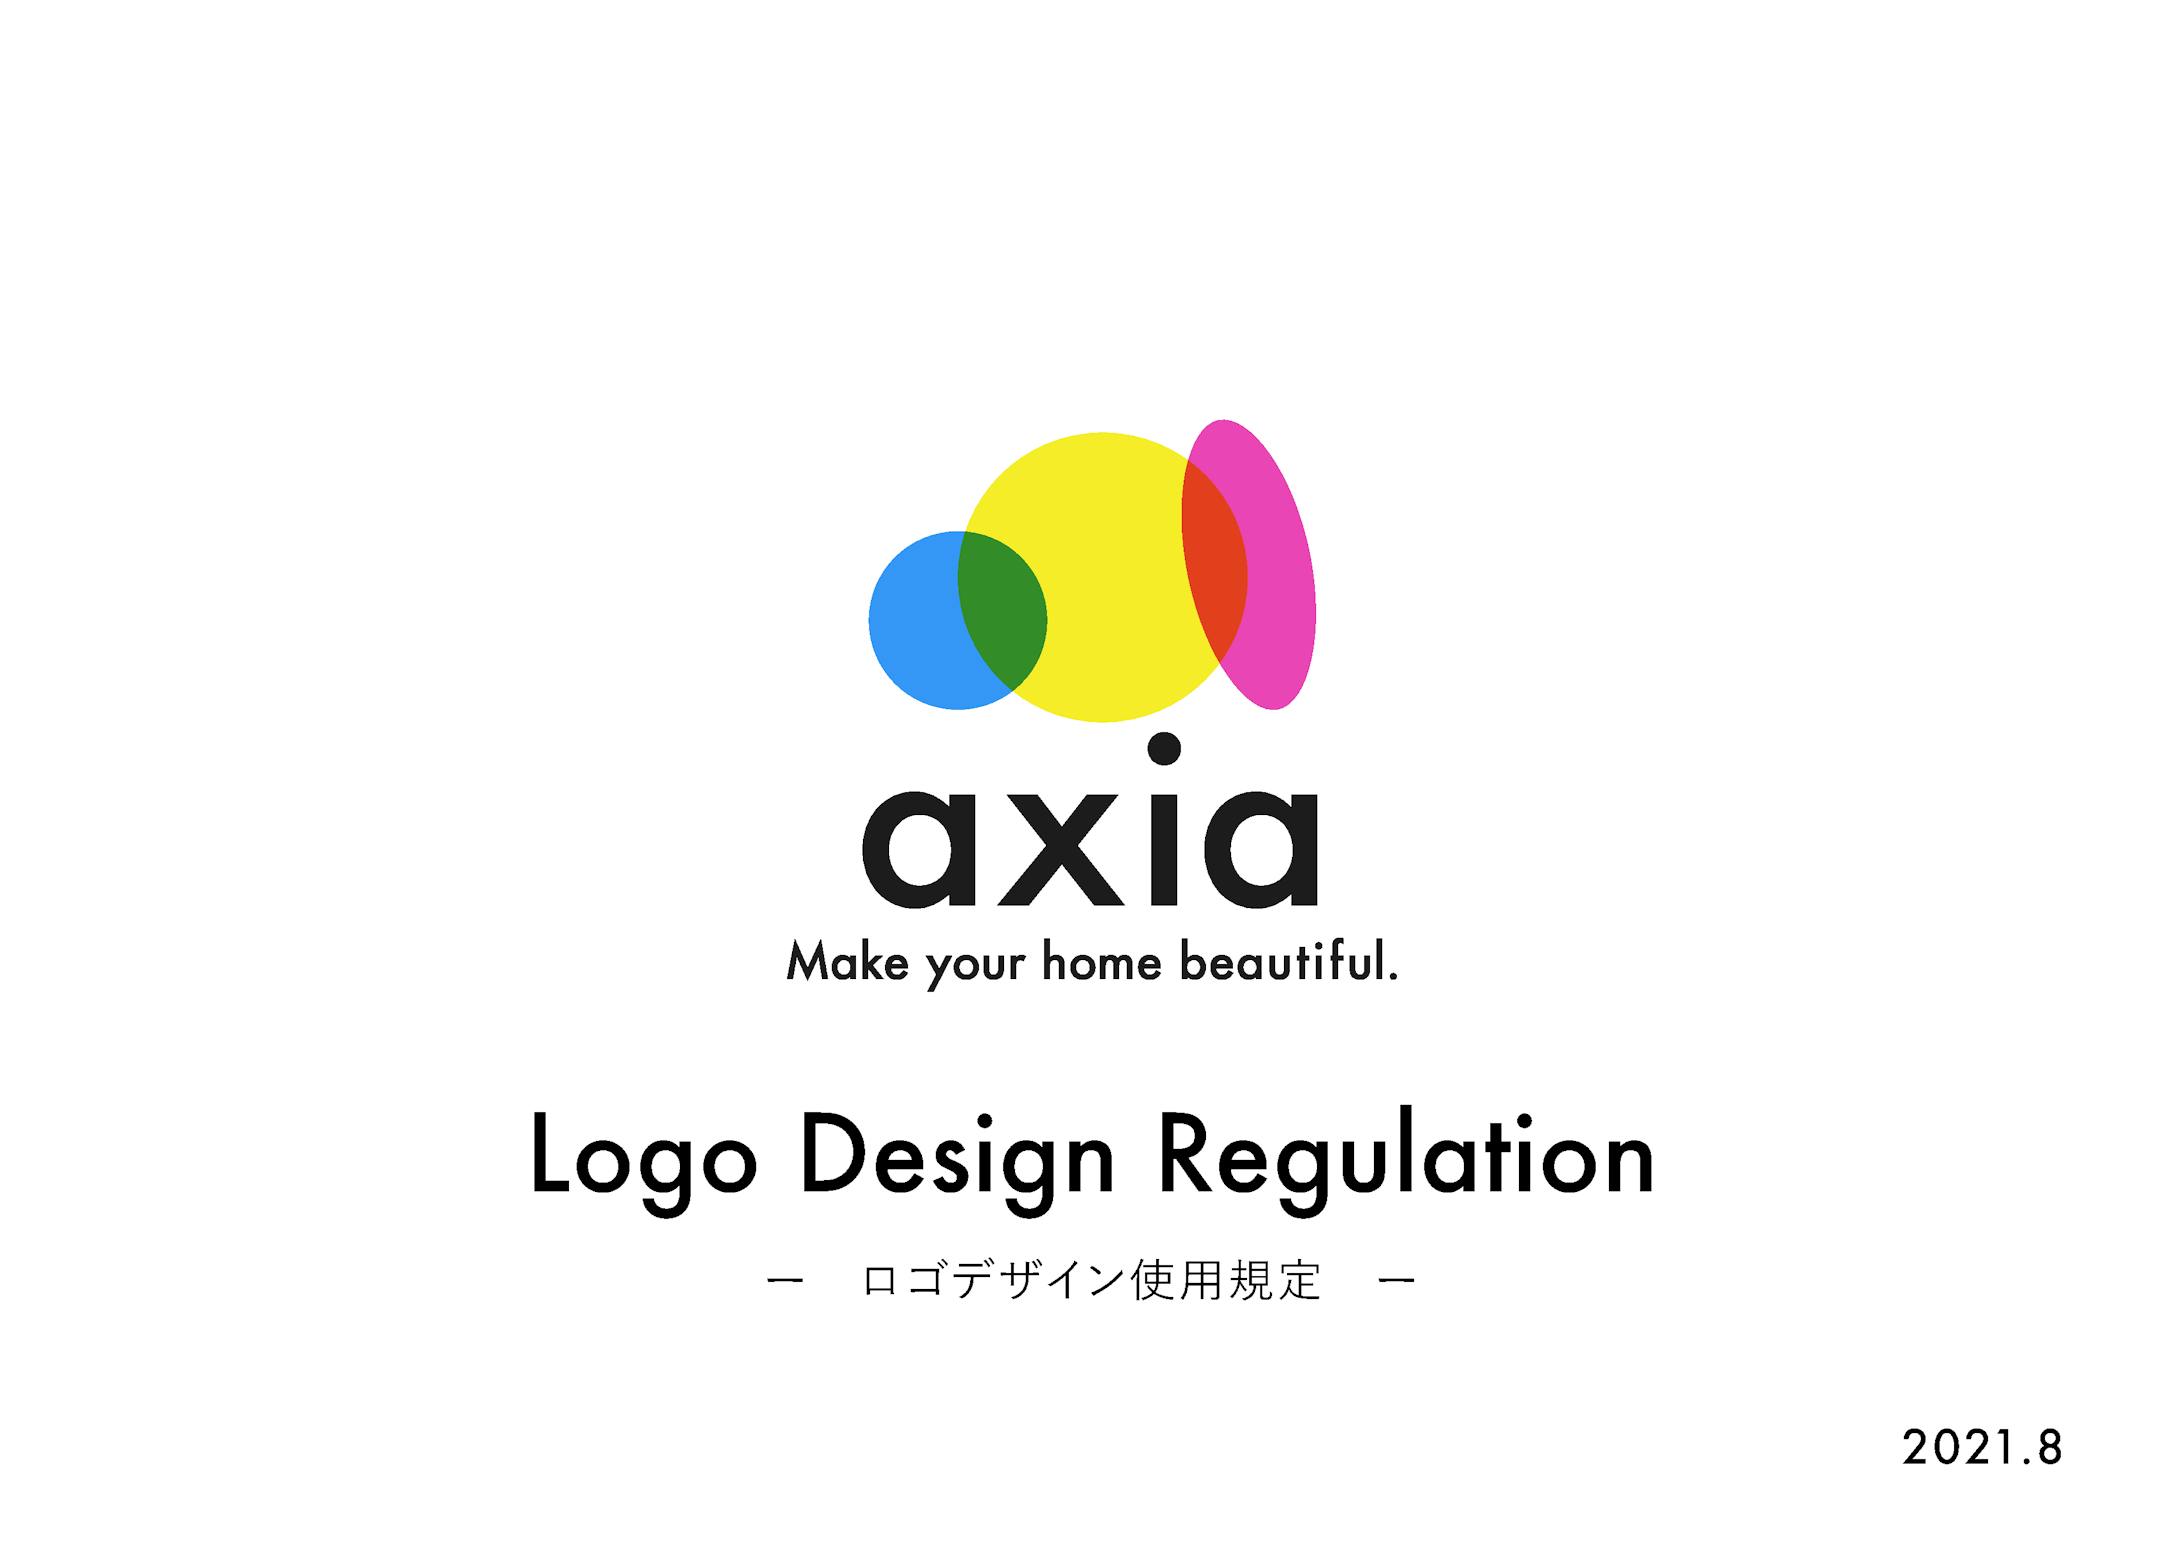 axia logo regulation-1